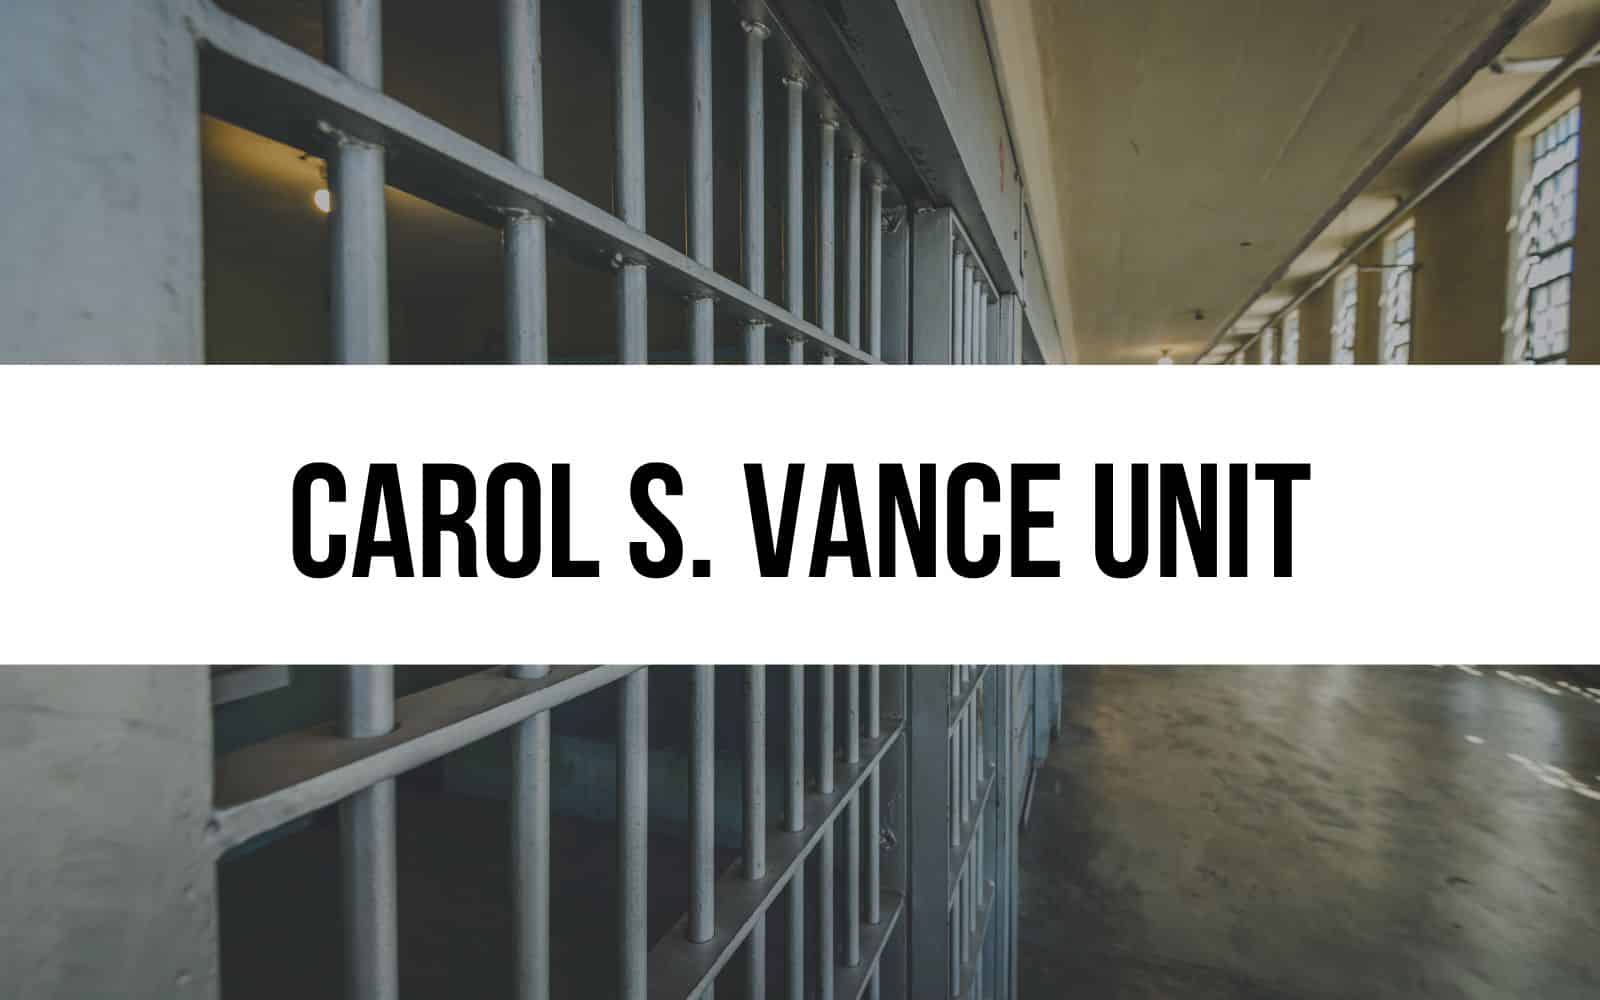 Carol S. Vance Unit